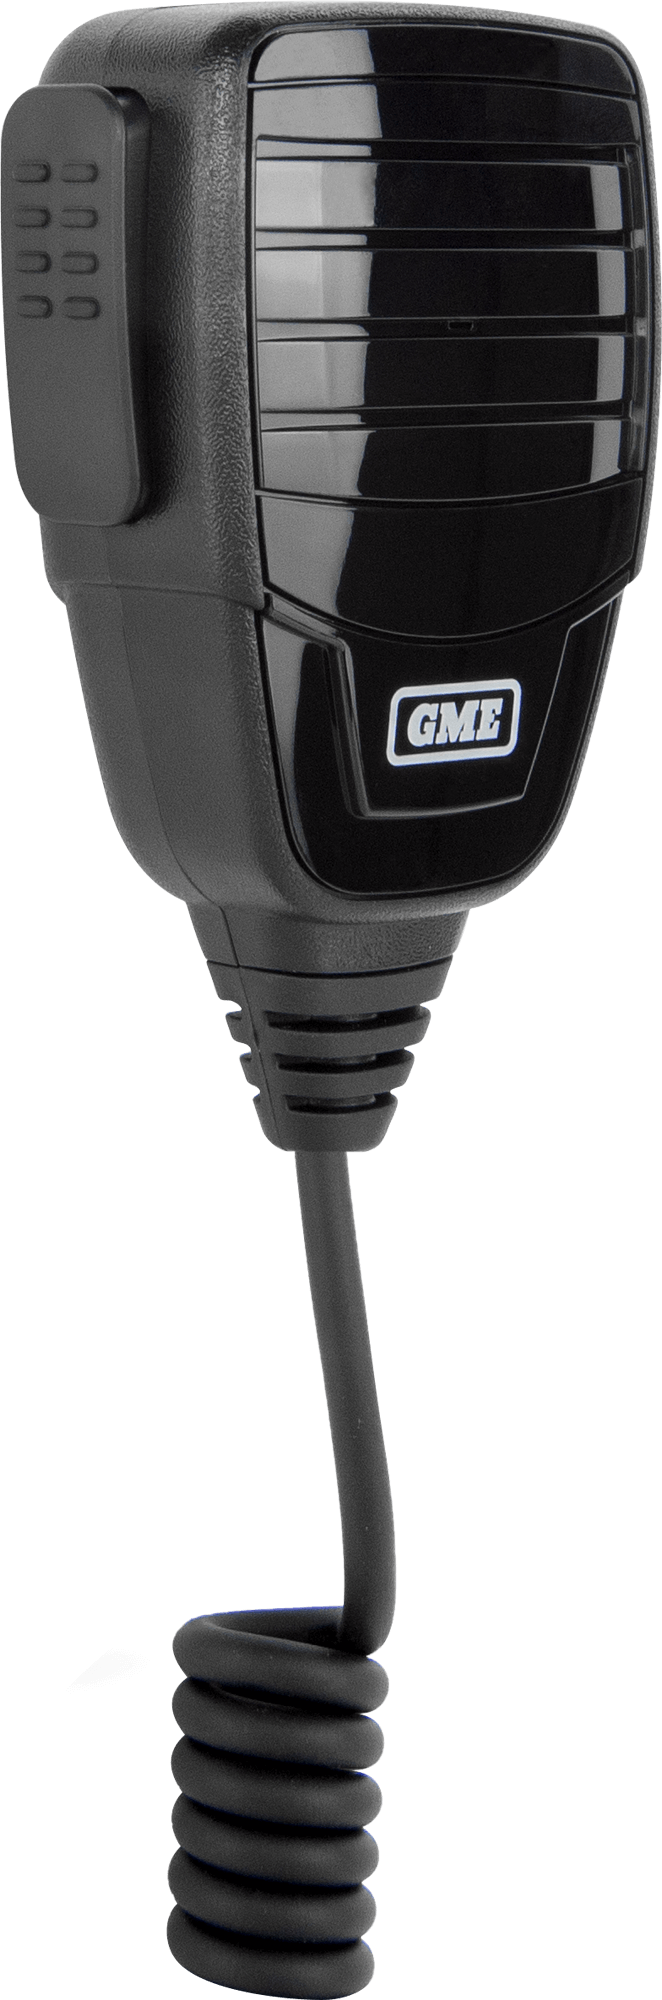 MC553B Heavy Duty GME Microphone